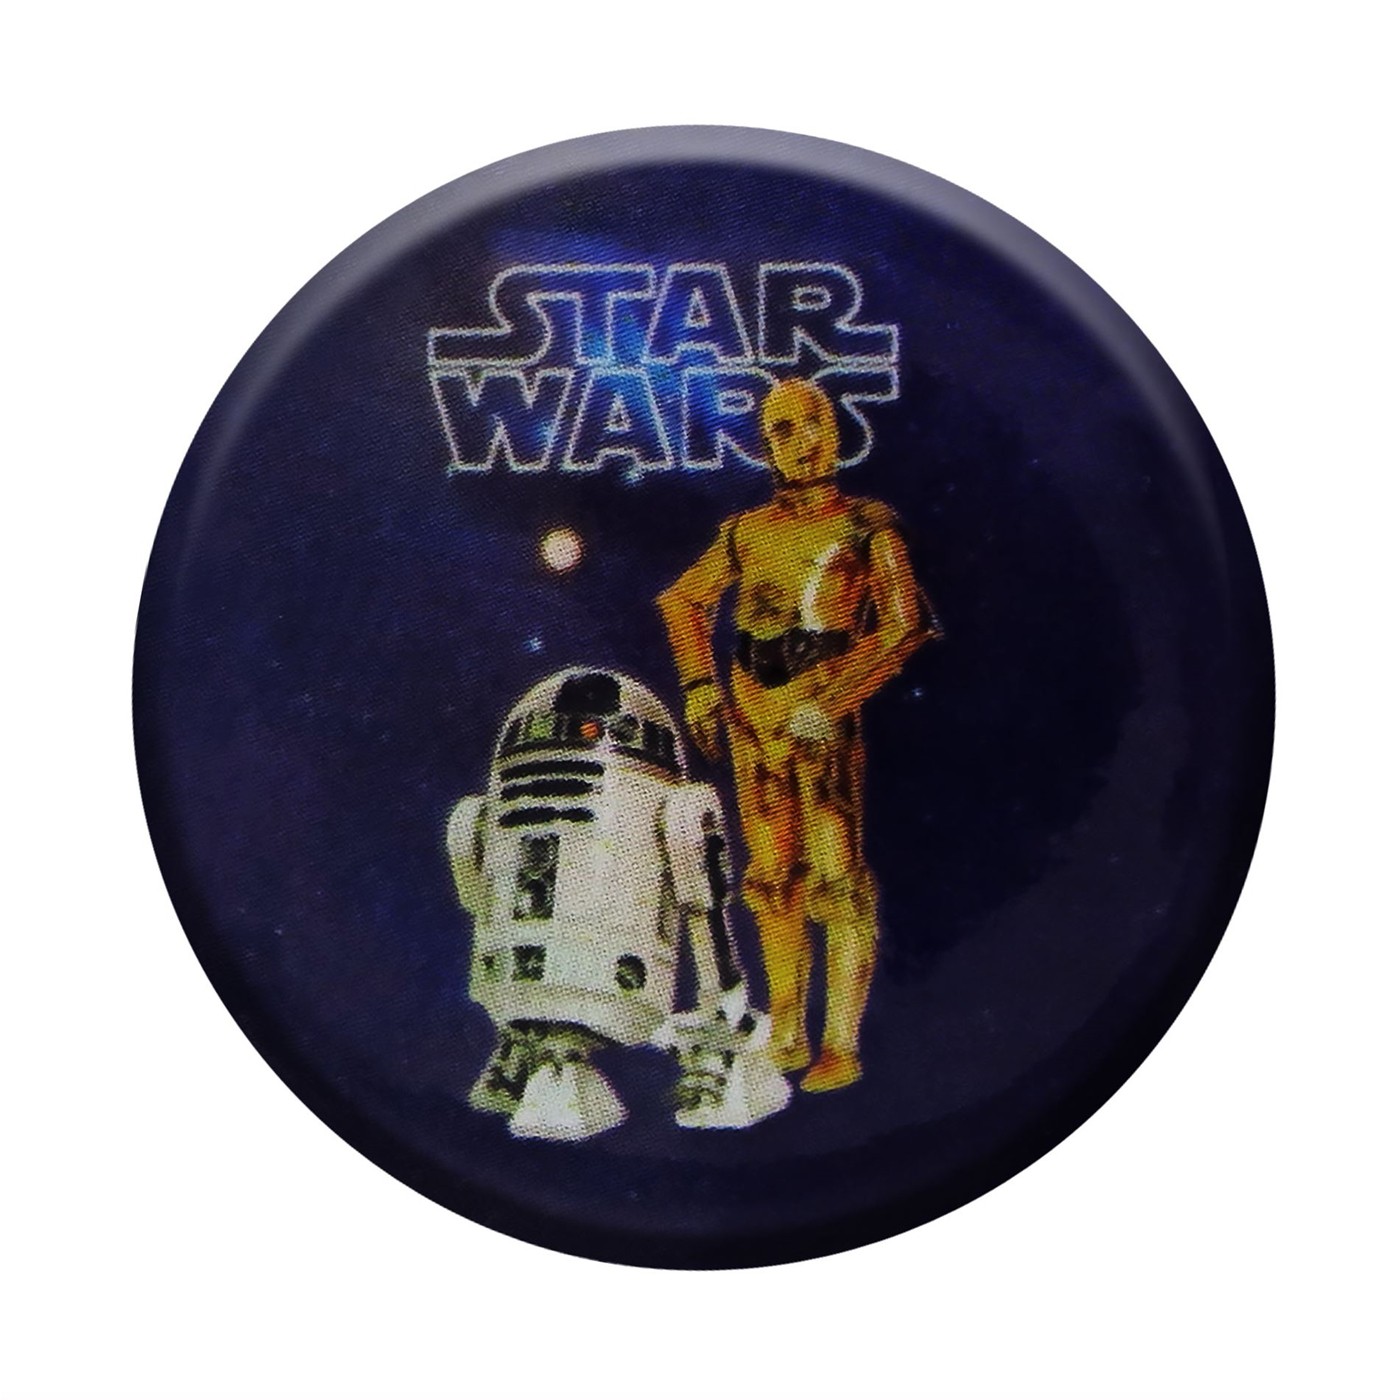 Star Wars Droids on Purple Button